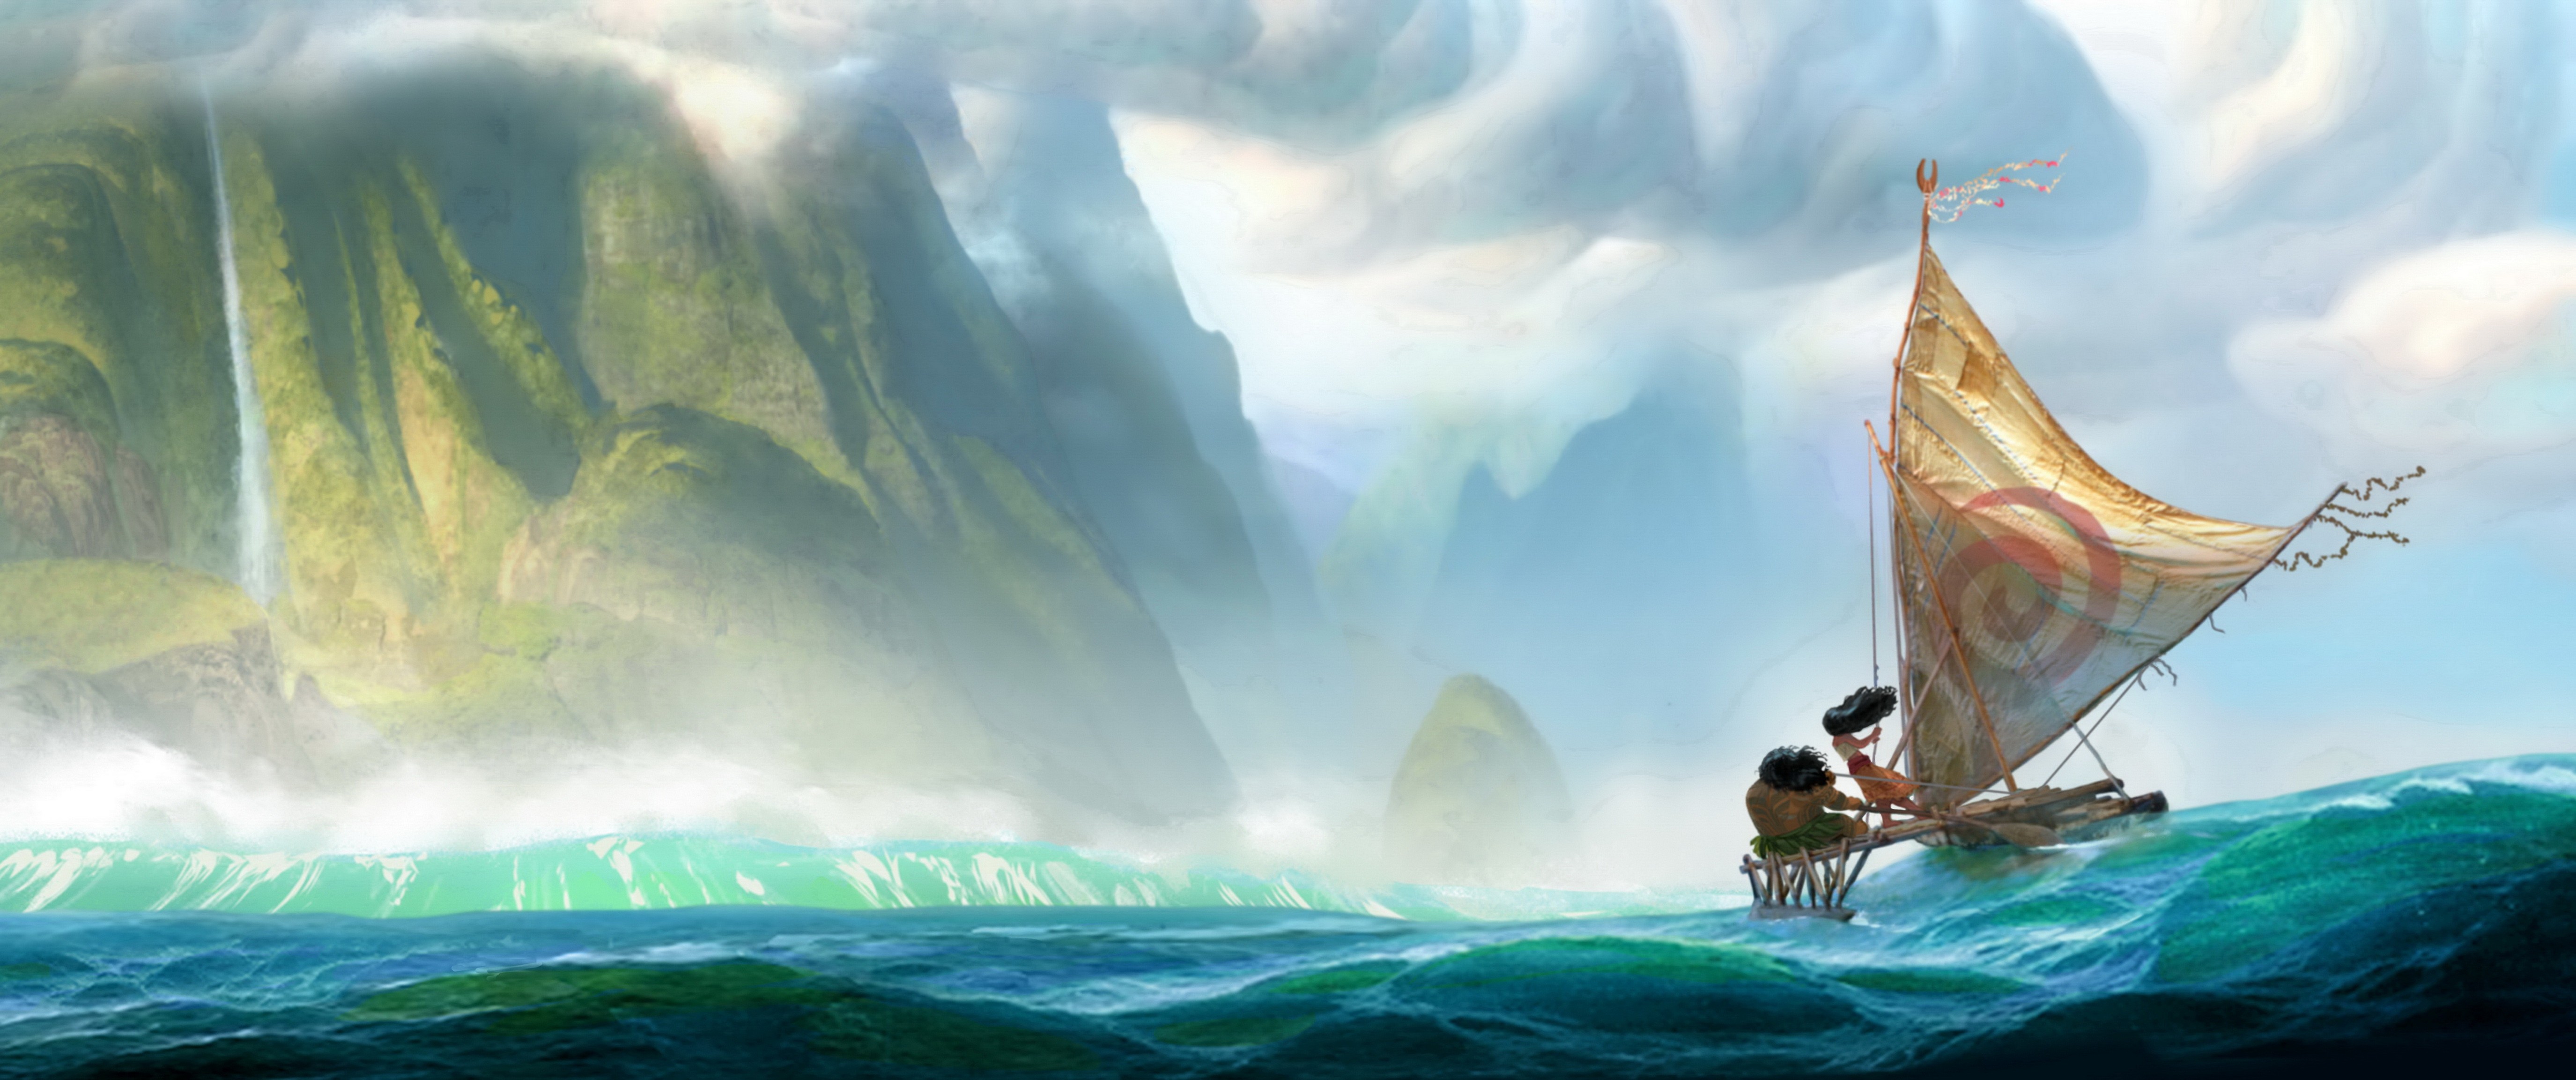 General 5500x2305 Moana landscape sea boat fantasy art island movies animated movies Disney digital art